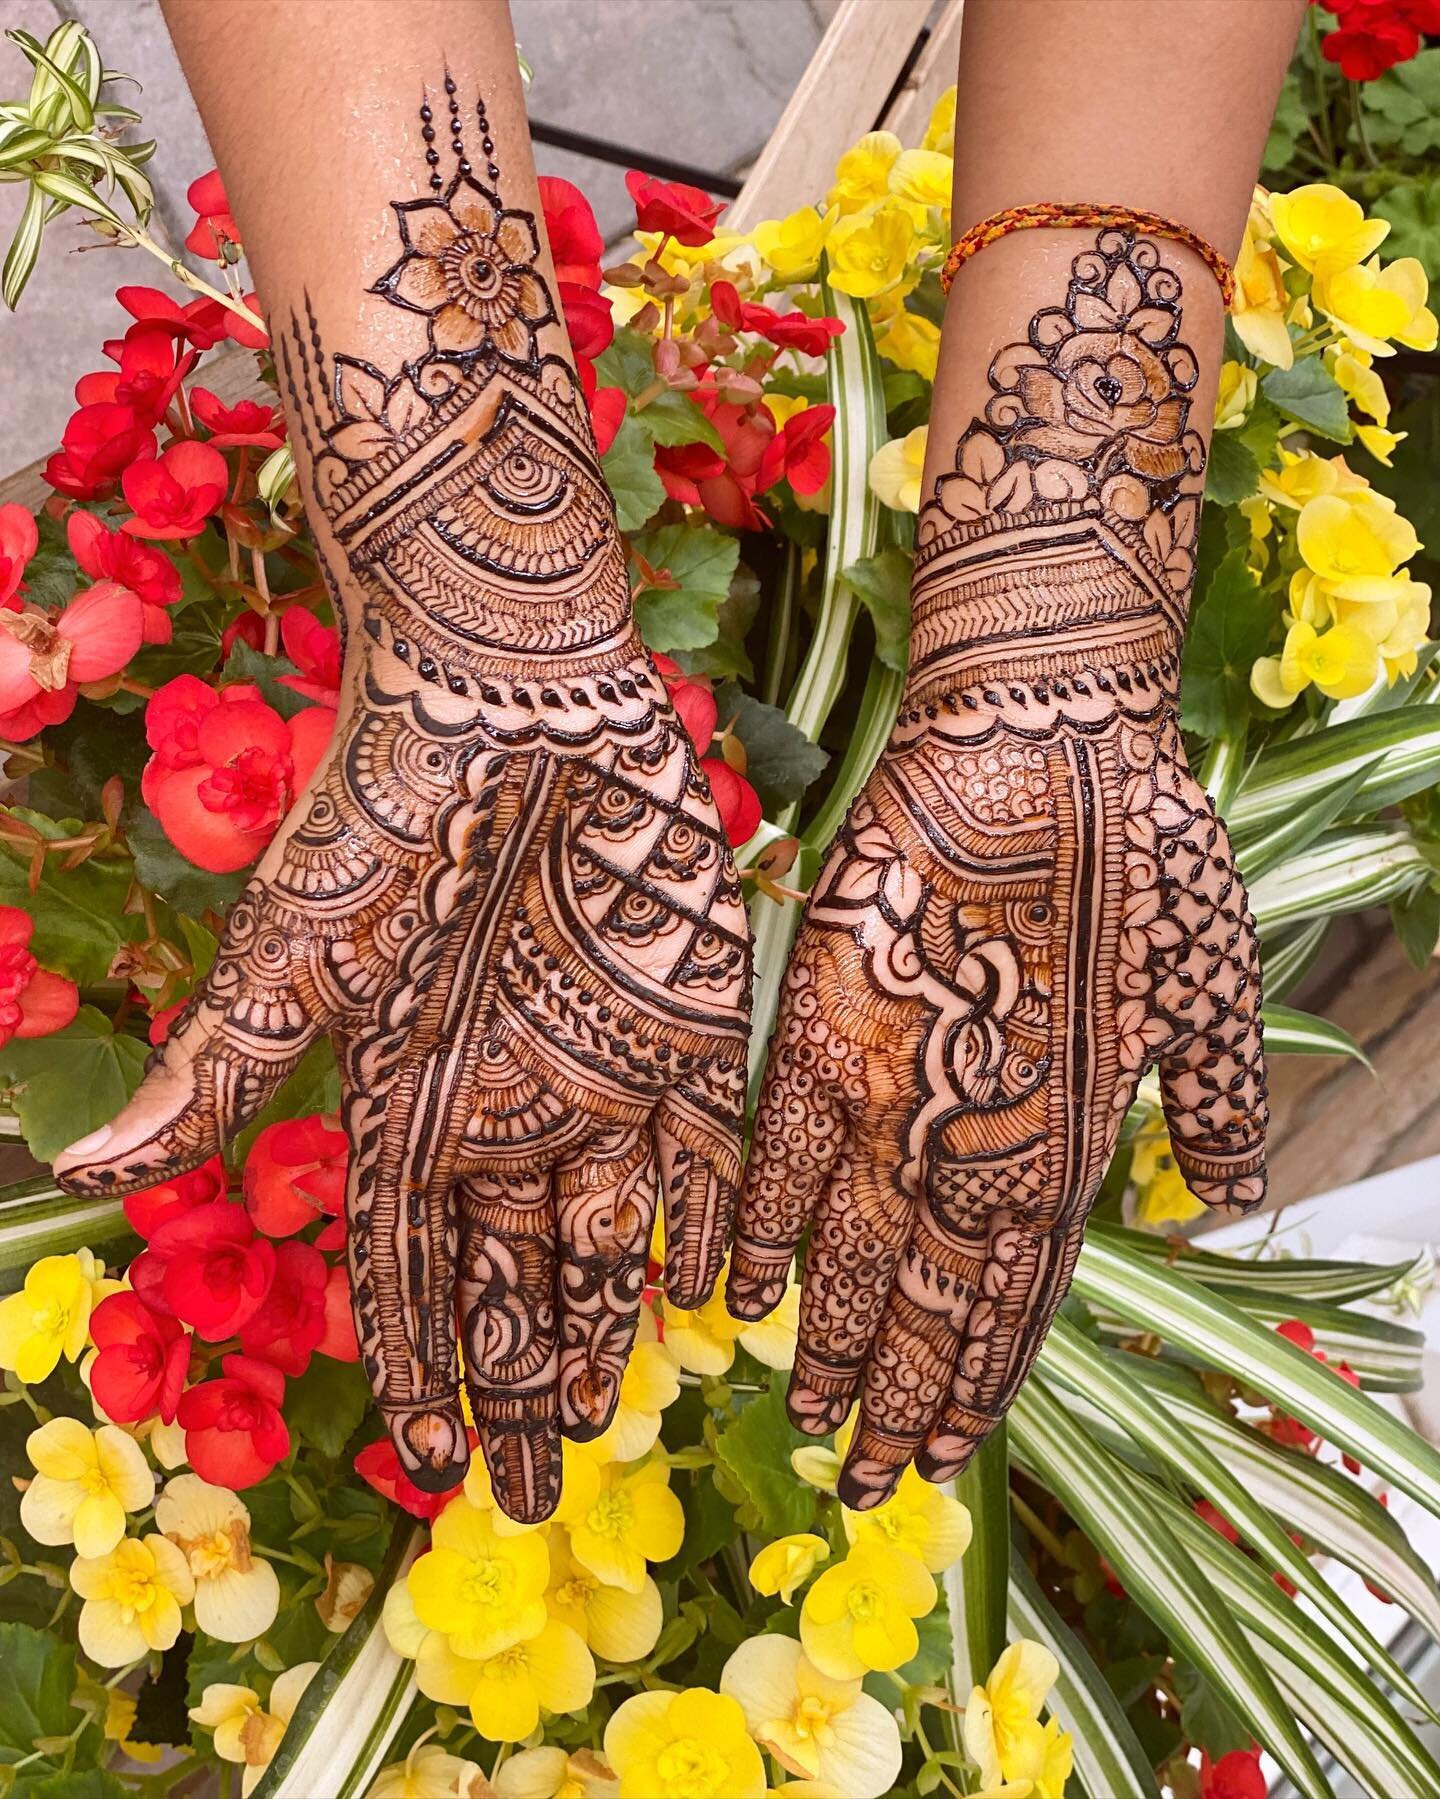 It&rsquo;s all in the details 💕✨

#touchofdimple #hennadesign #wedmegood #torontohennaartist #torontowedding #southasianweddings #indianwedding